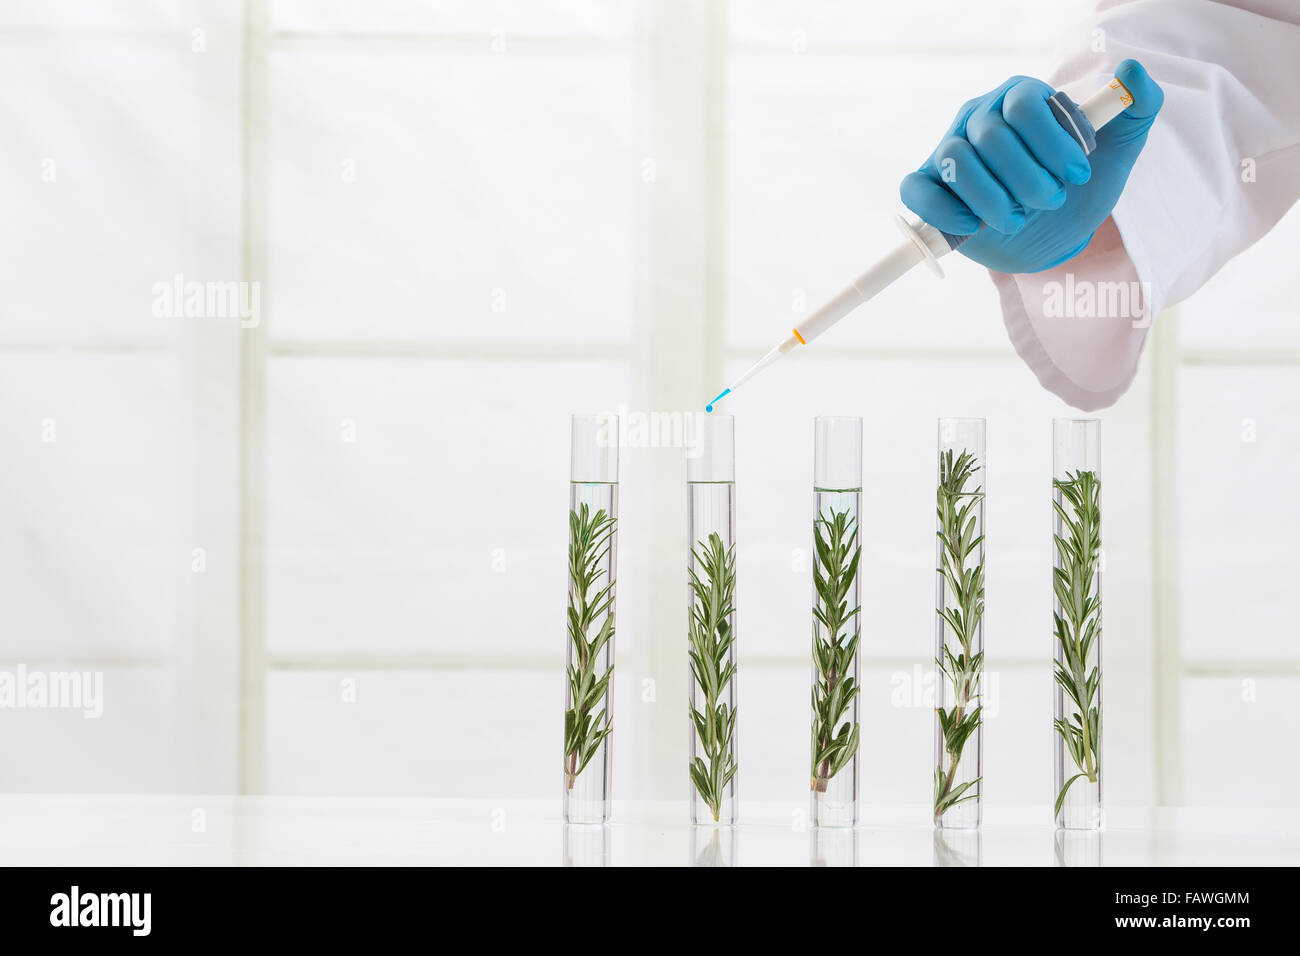 laboratory cloning experiment on plants Stock Photo